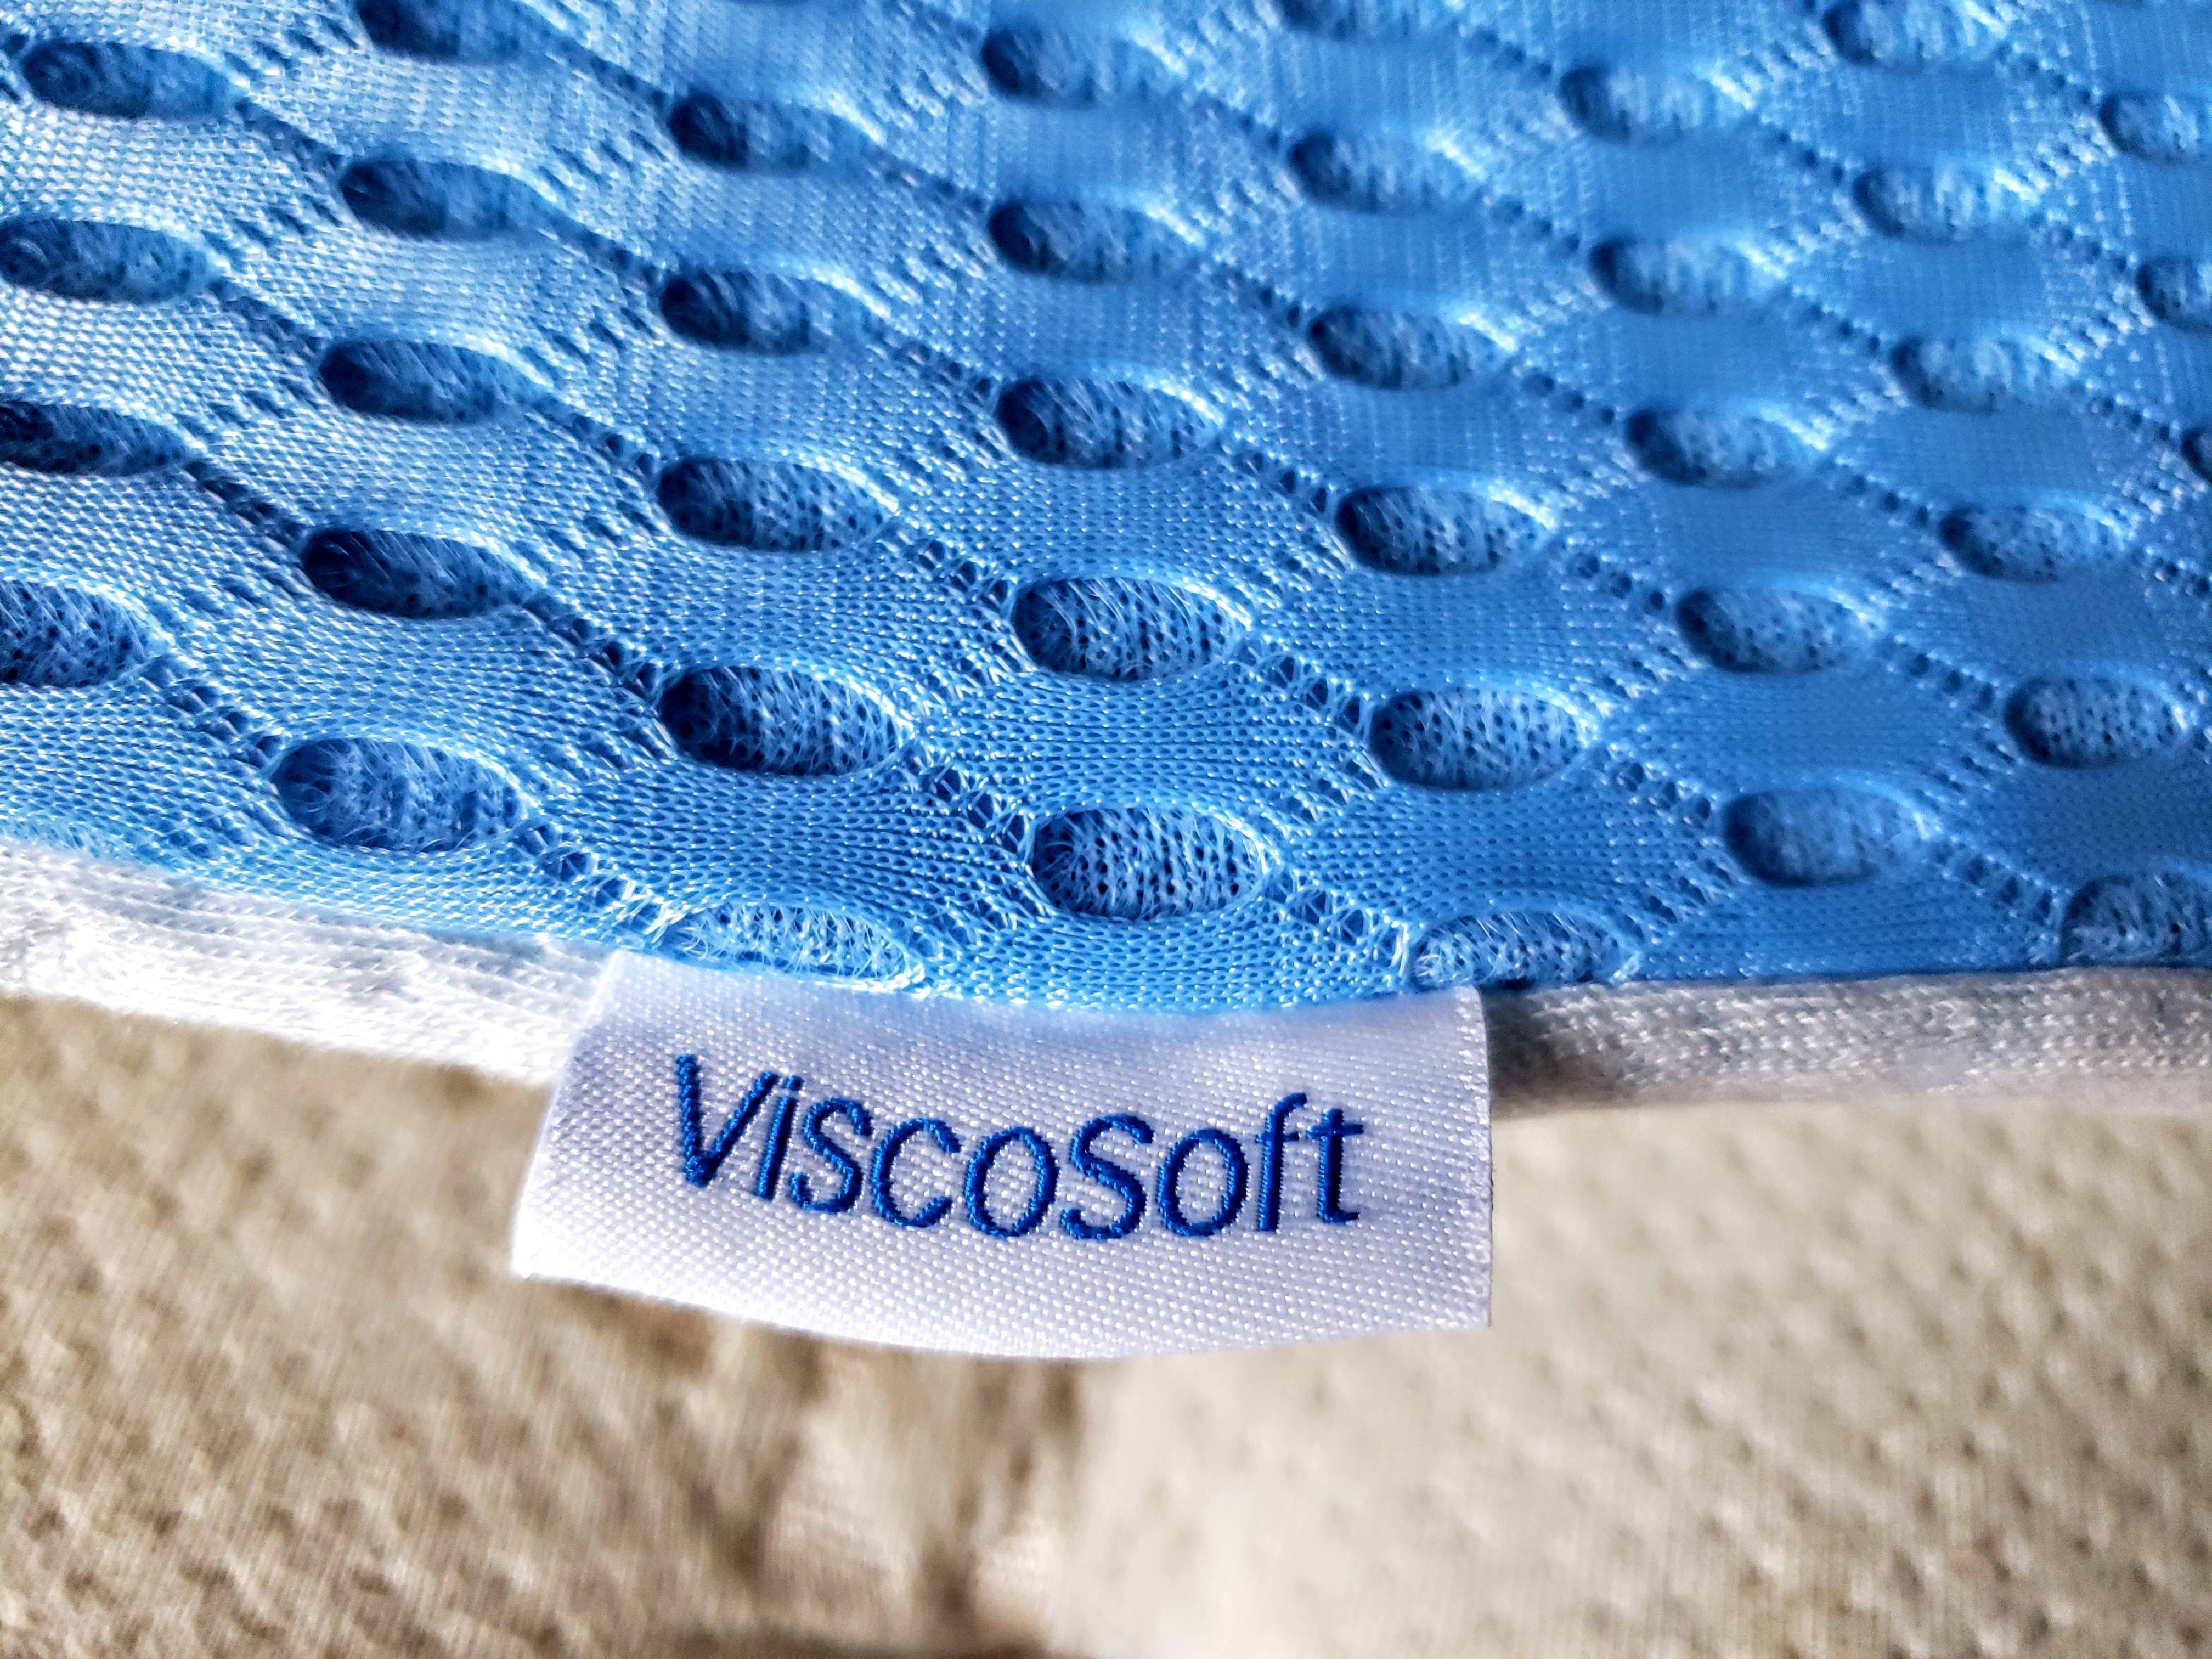 viscosoft latex mattress topper